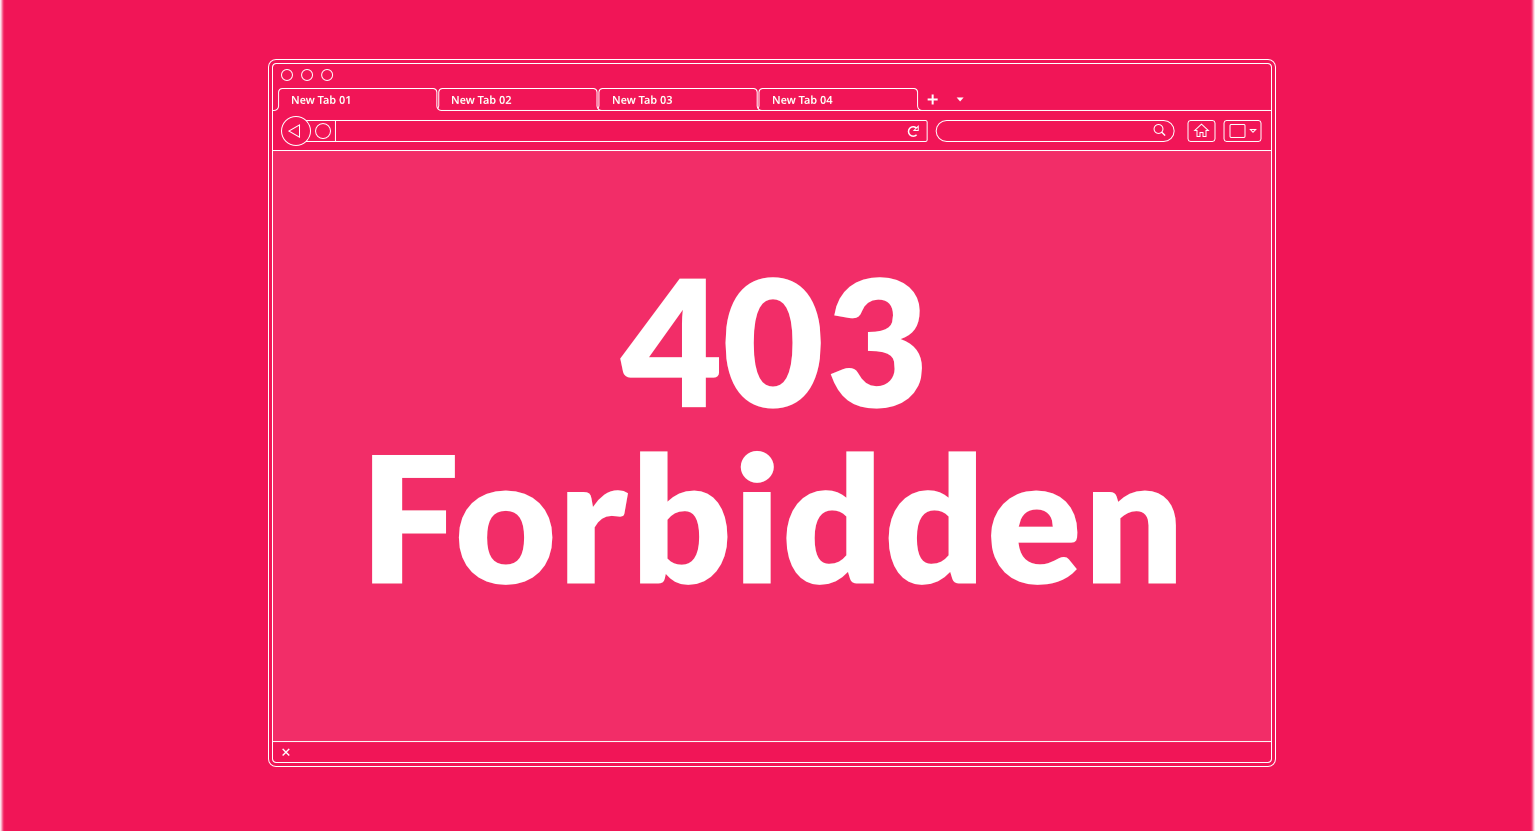 forbidden error pin 403